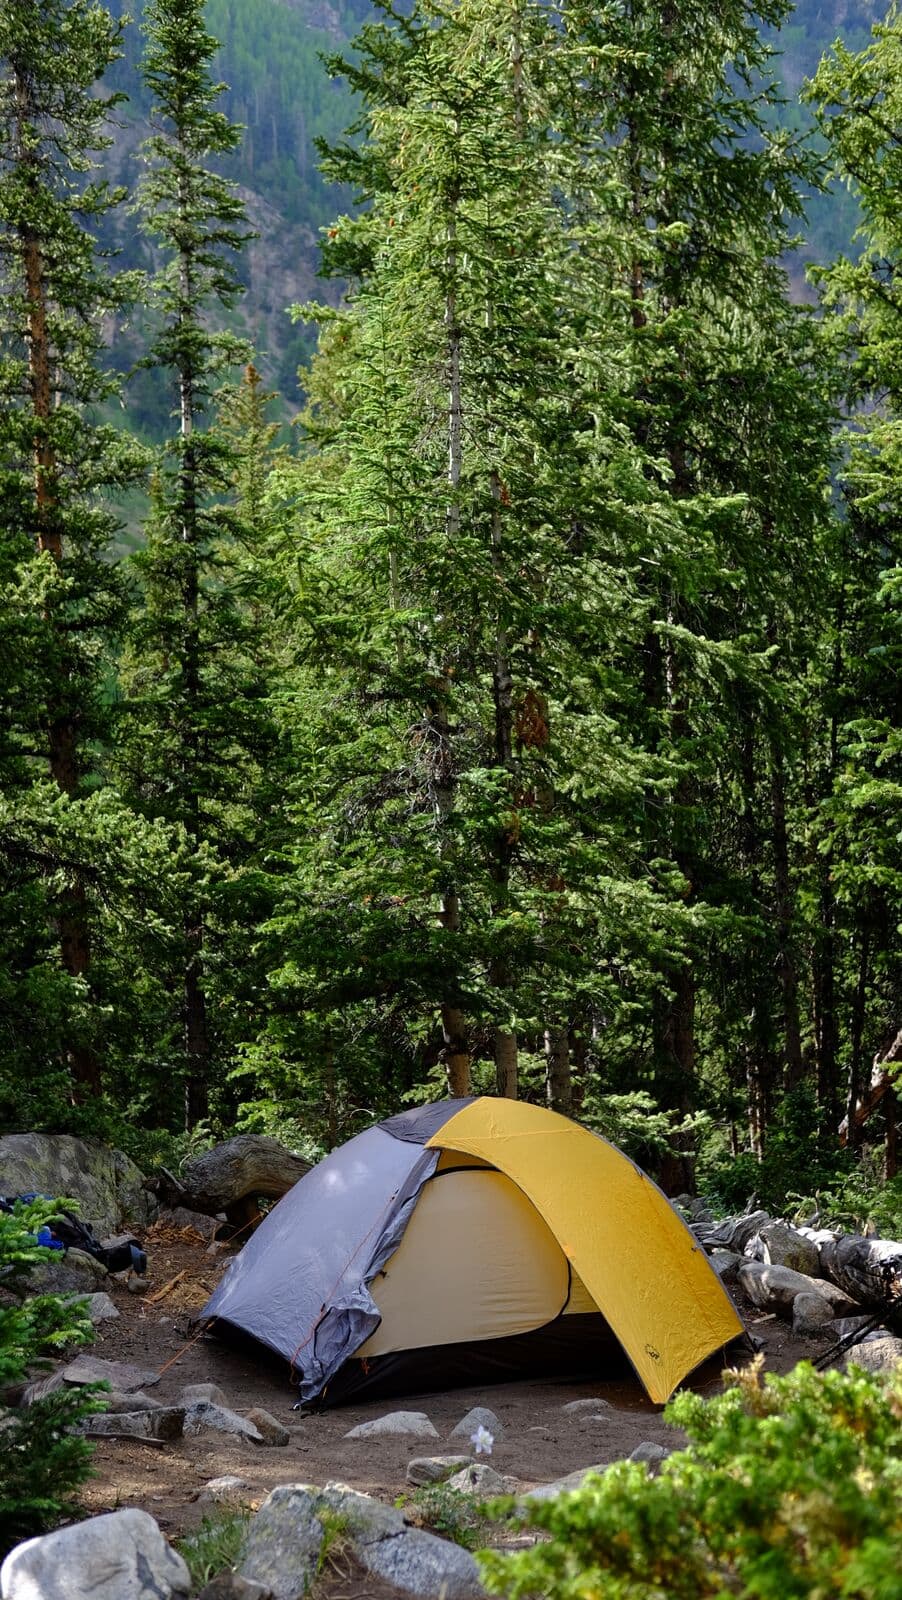 Perfect camp spot.